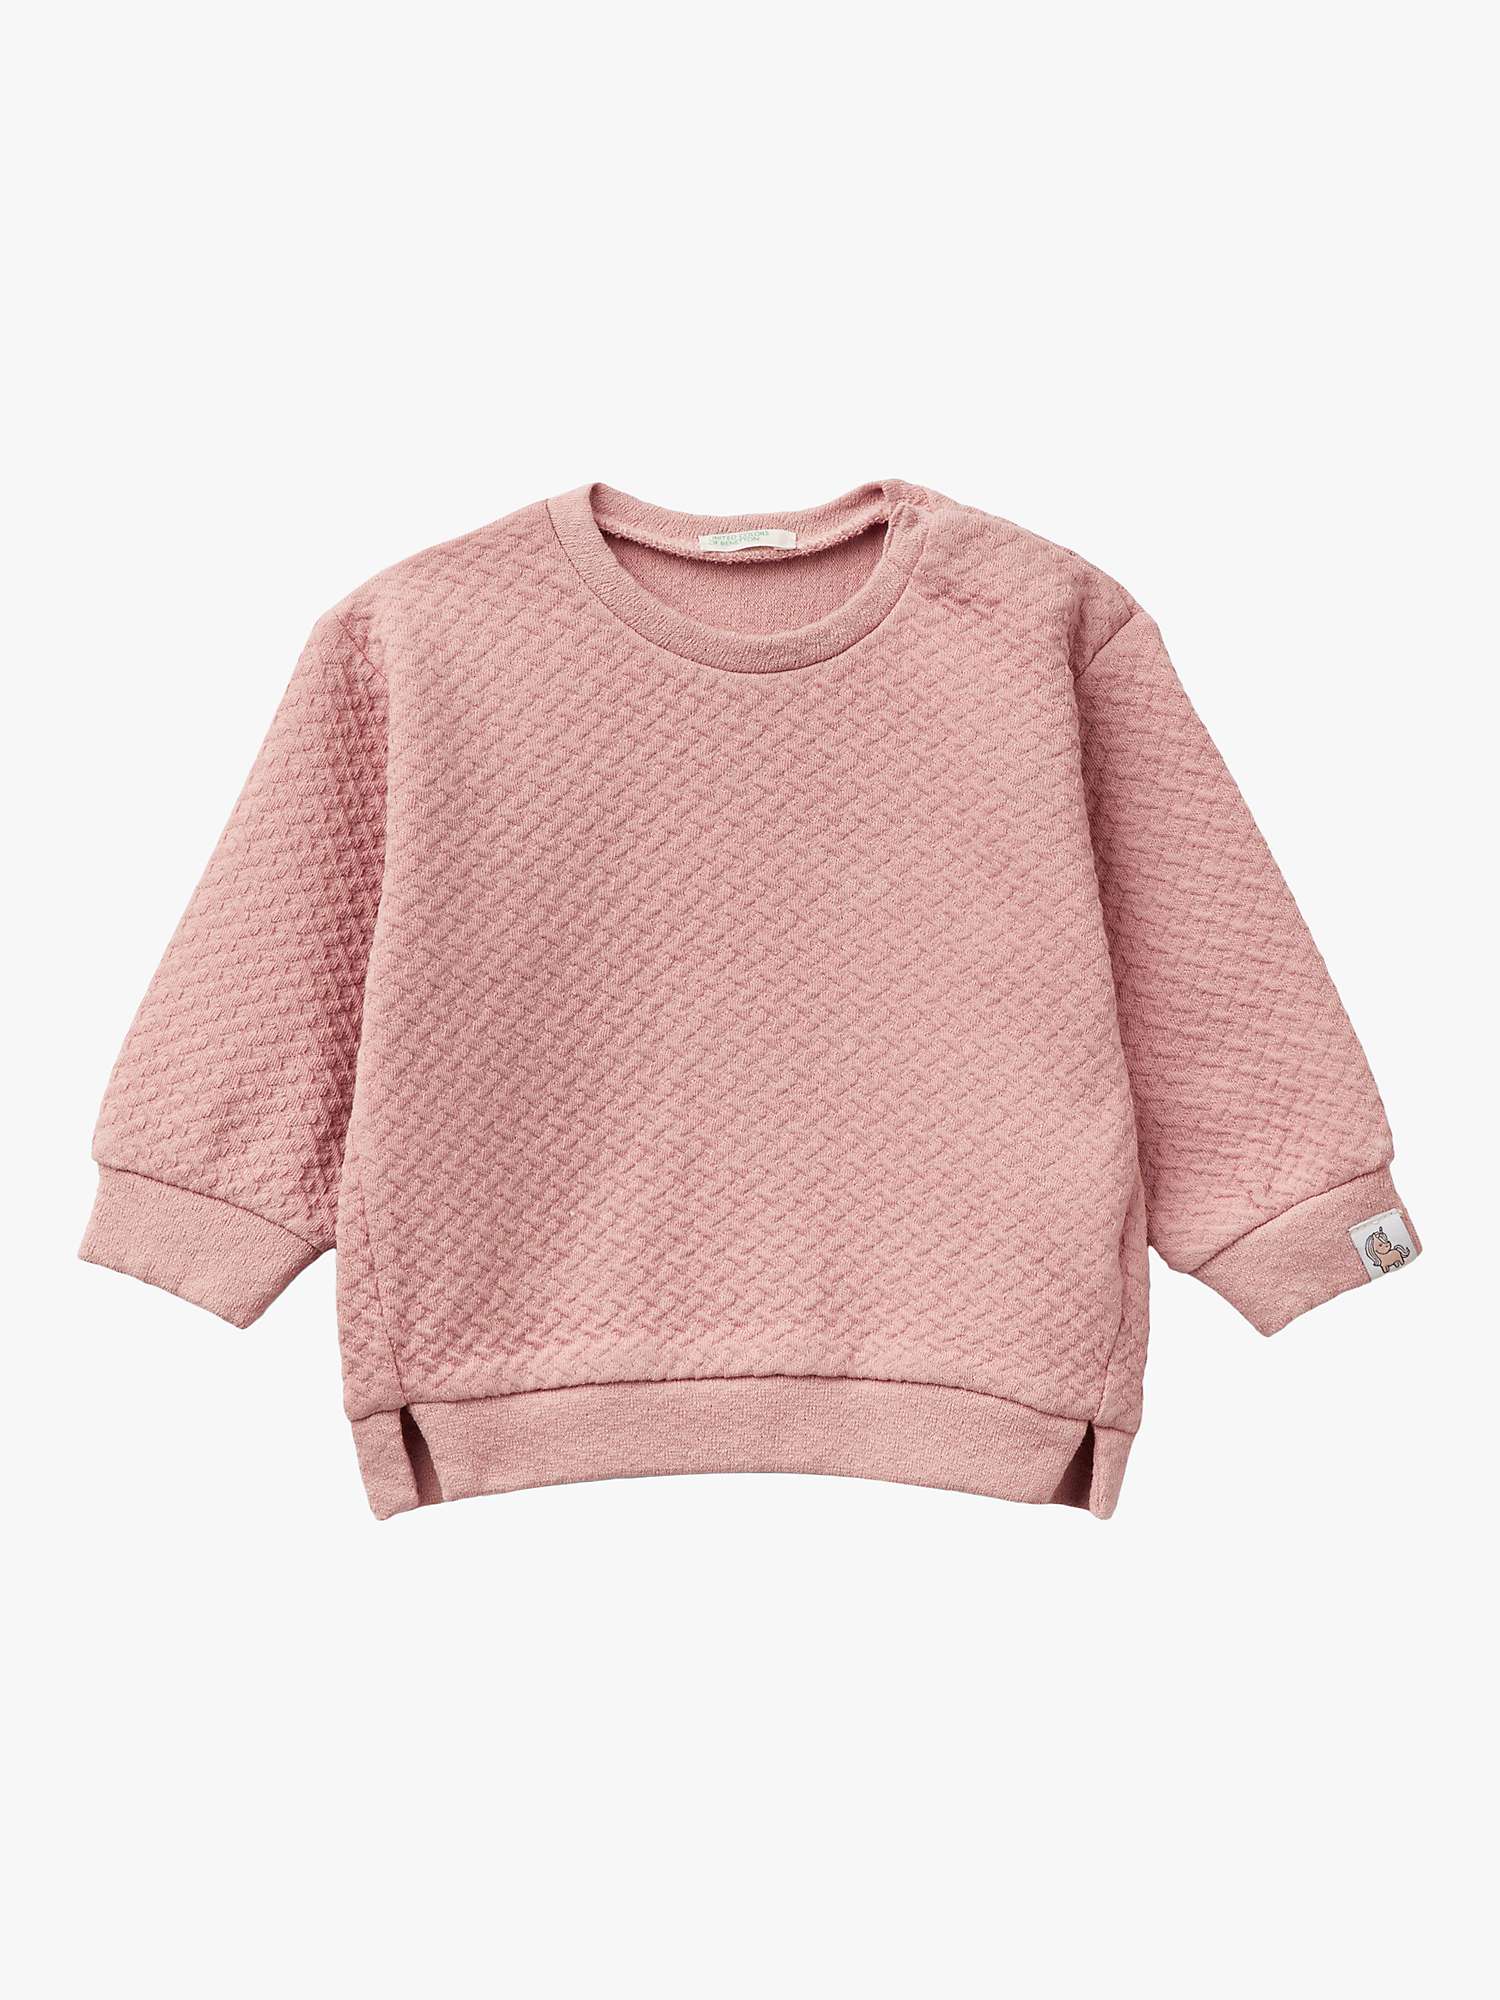 Buy Benetton Baby Jacquard Textured Sweatshirt Online at johnlewis.com